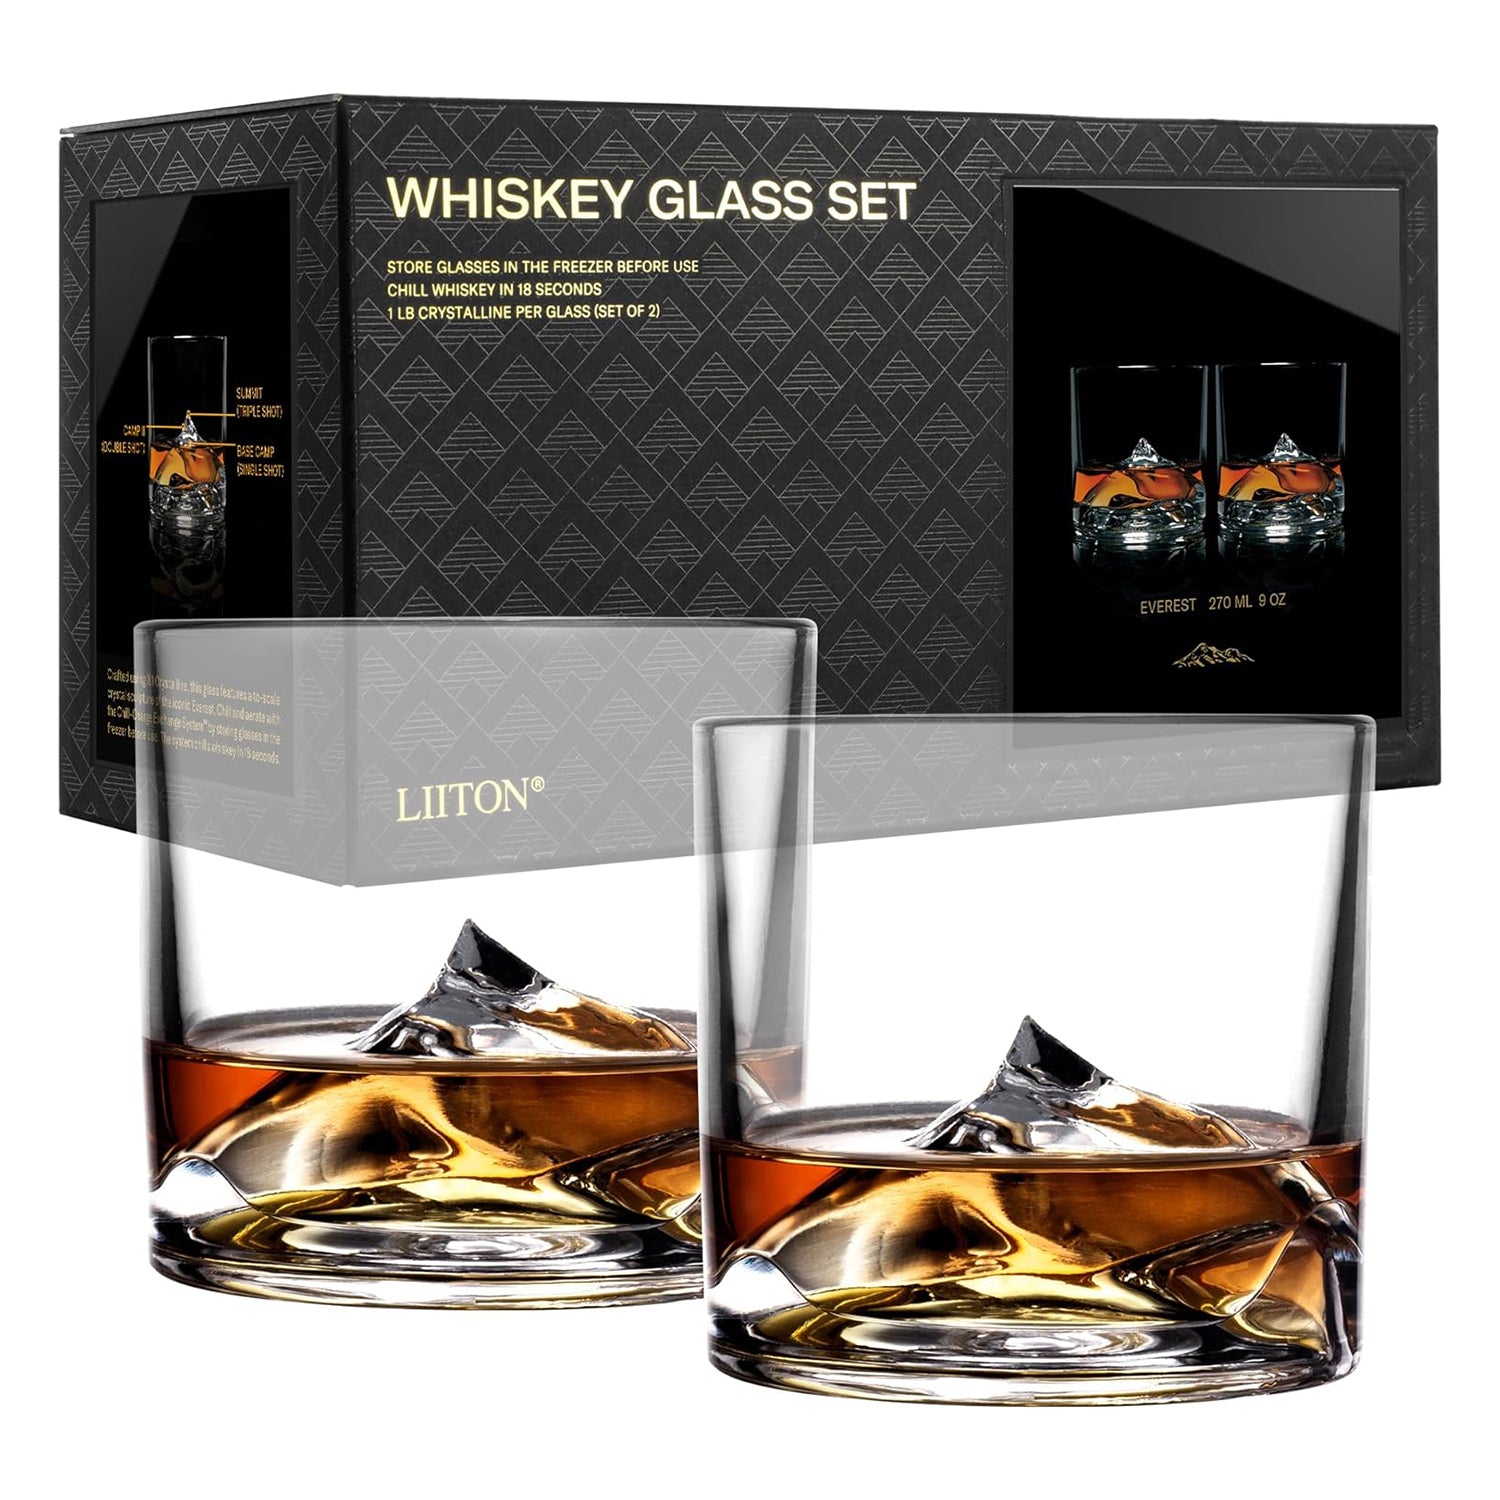 Bezrat Whiskey Glass Gift Set - Bed Bath & Beyond - 32742781